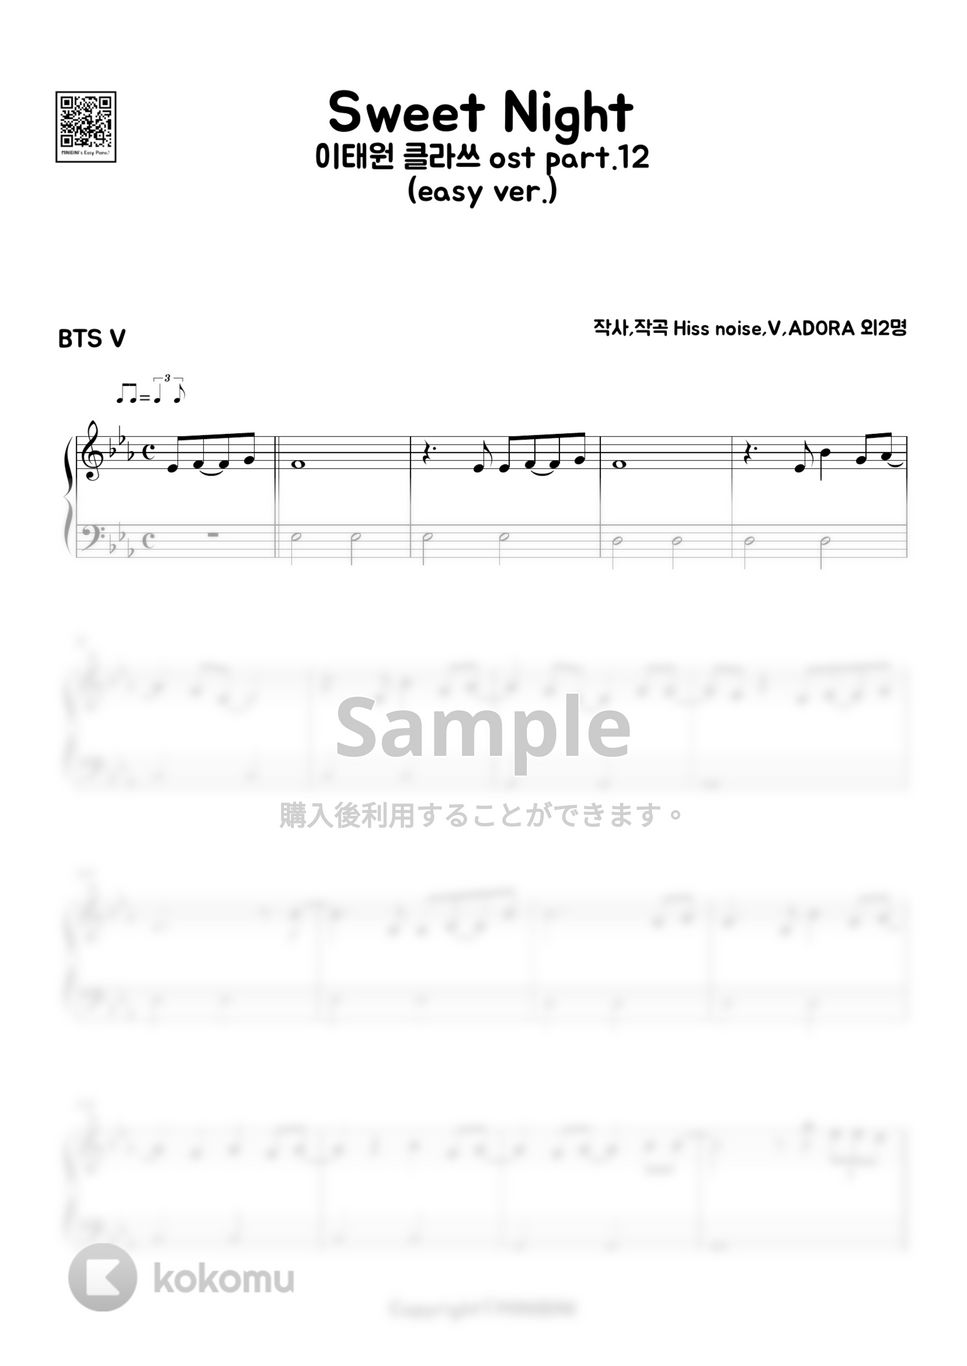 V (BTS) - Sweet Night (梨泰院クラス OST / Easy ver.) by MINIBINI